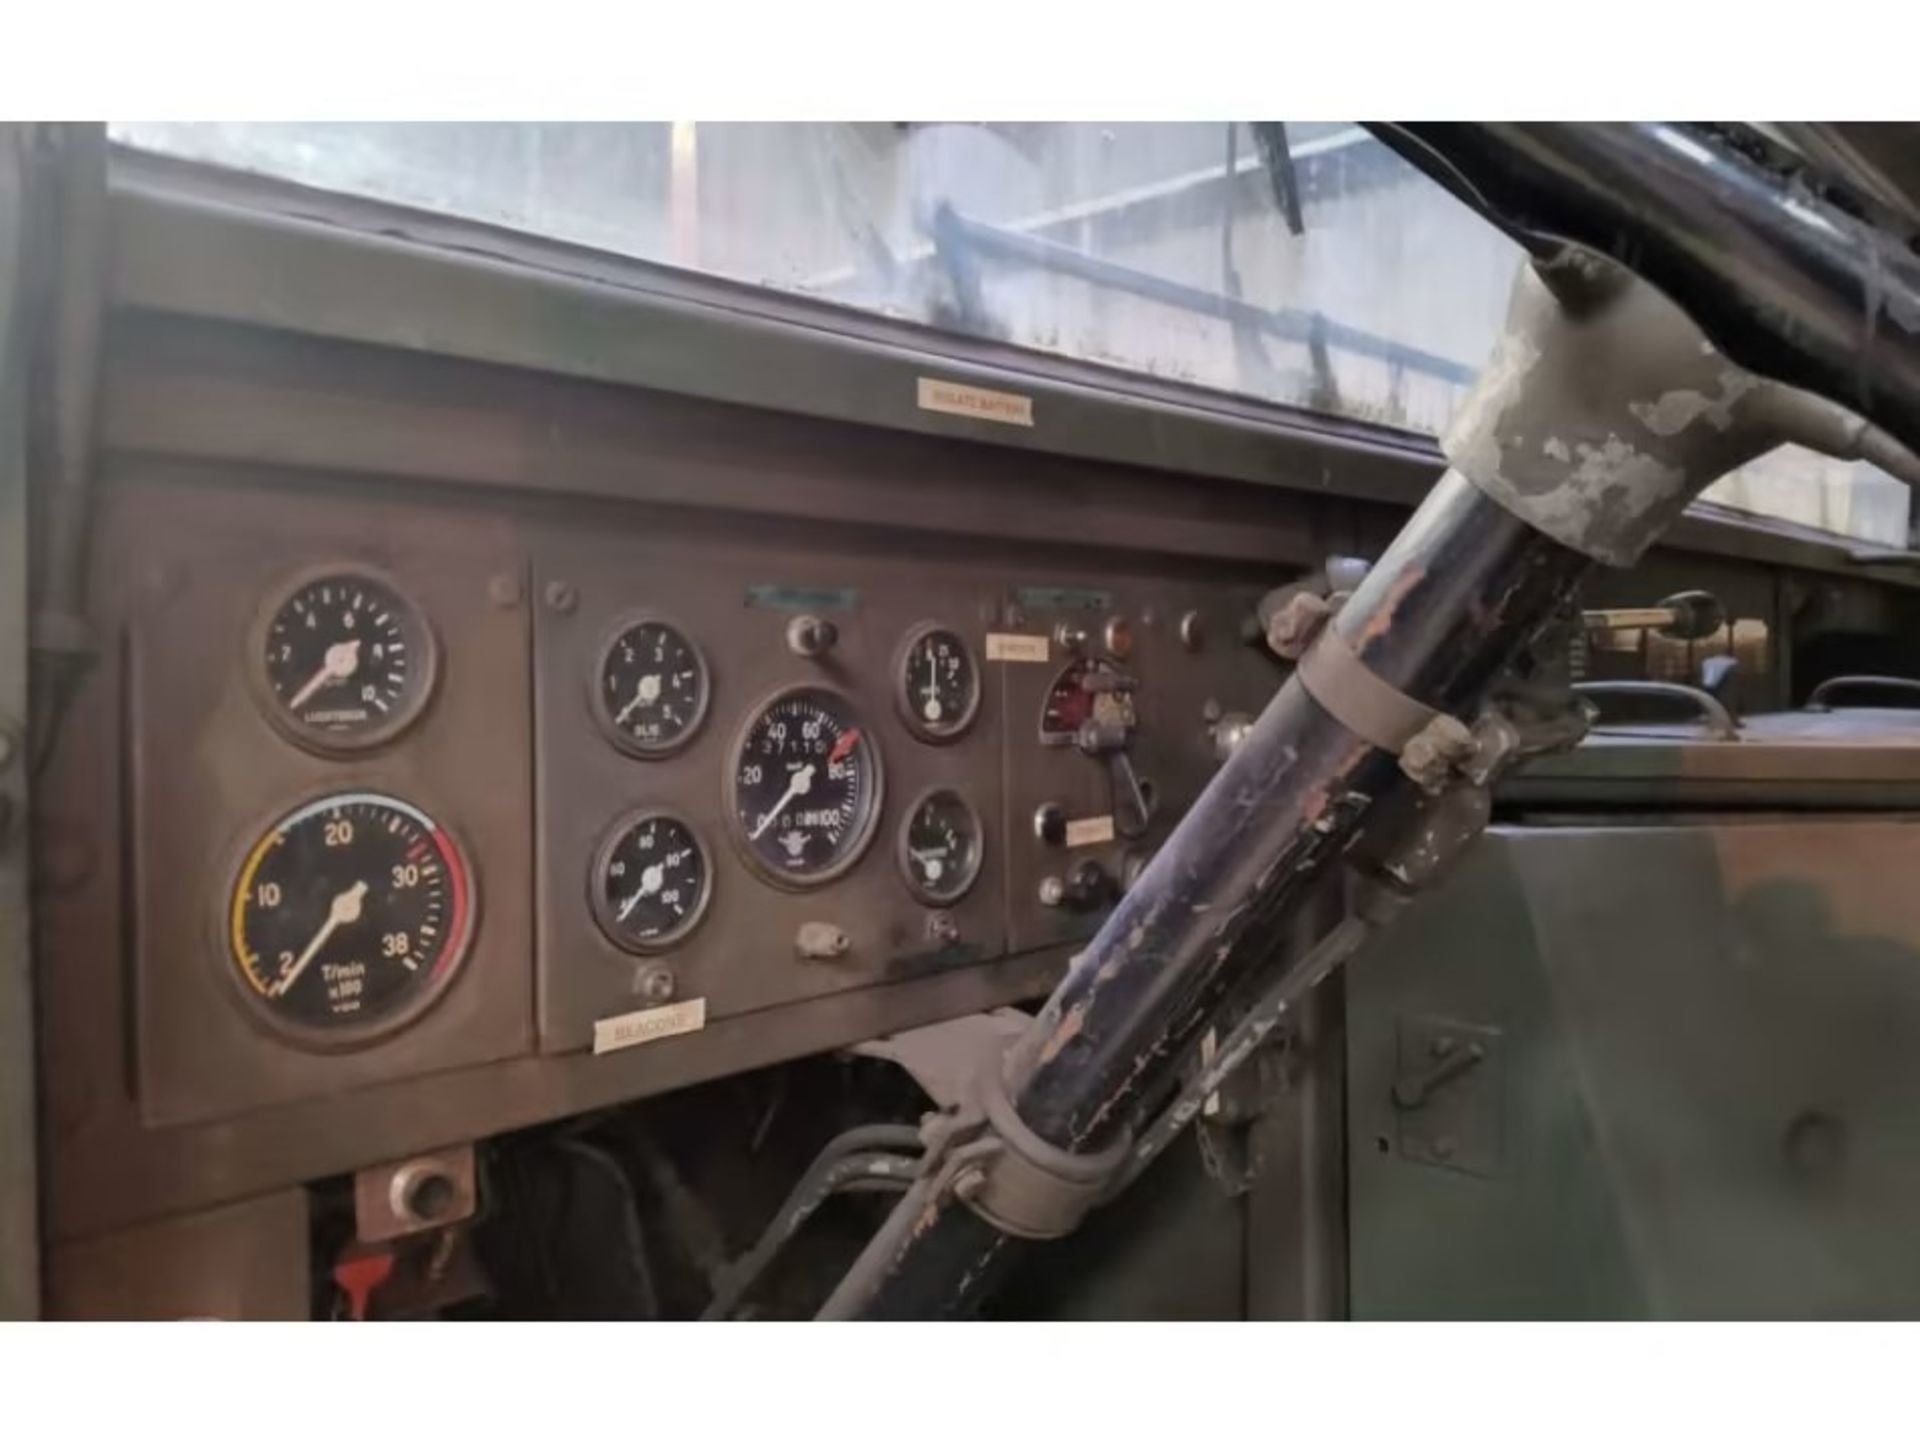 1968 DAF YA616 - 6-wheel Drive Military Crane Vehicle - TAX MOT EXEMPT - Runs, Starts, Drives Lifts - Image 7 of 8